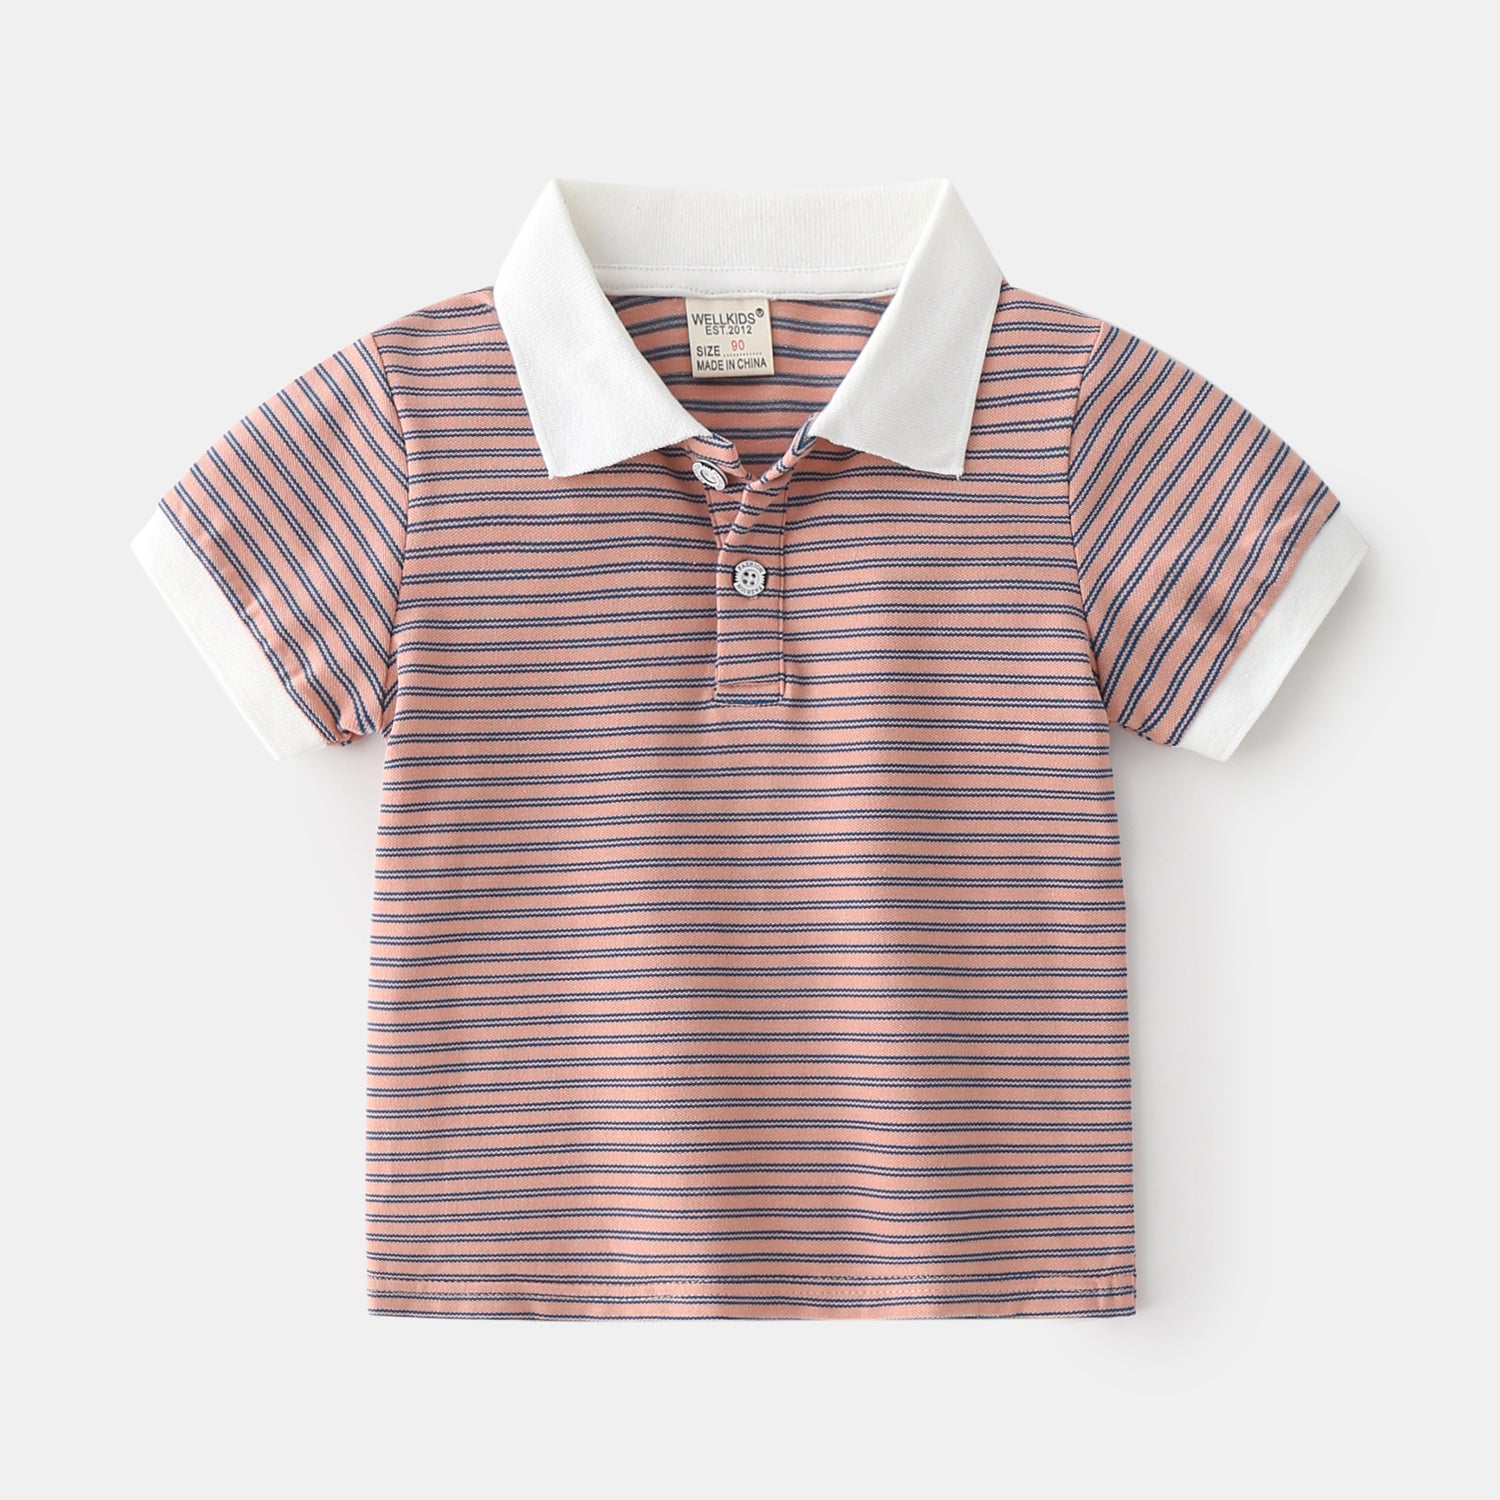 [513141] - Atasan Kaos Polo Fashion Anak Import - Motif Horizontal Line